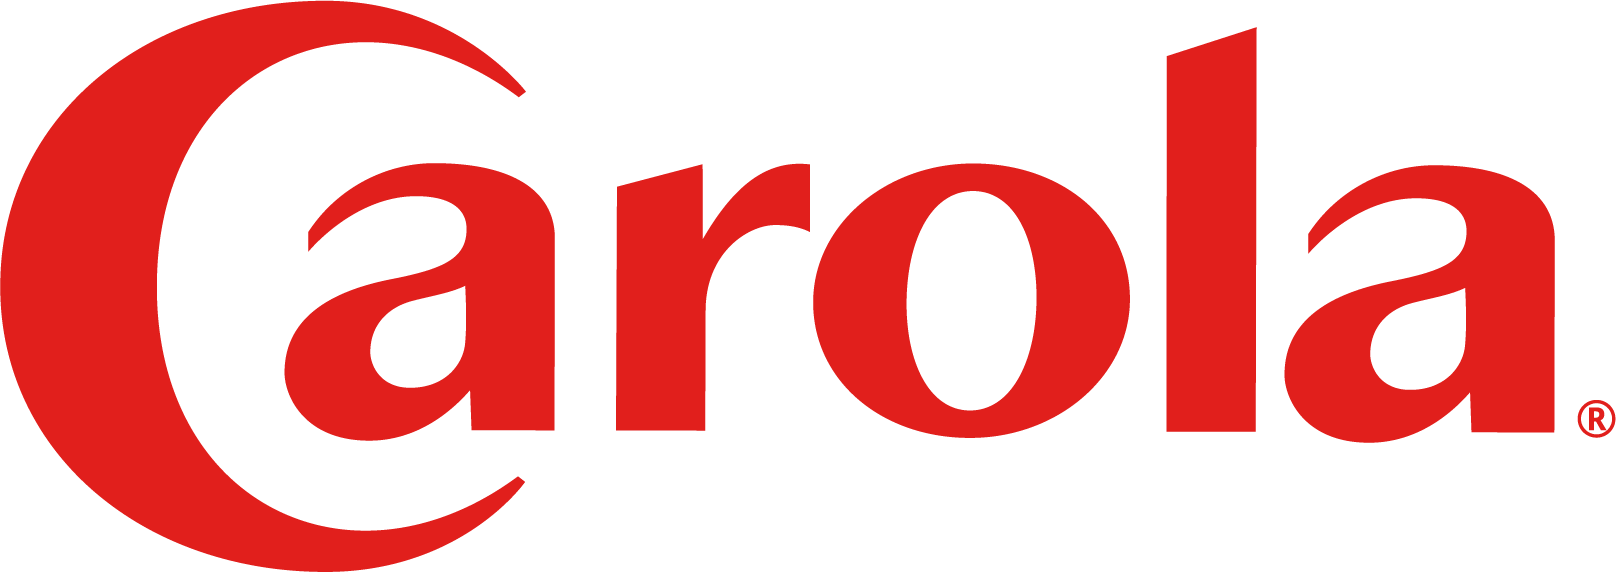 logo_carola_rouge